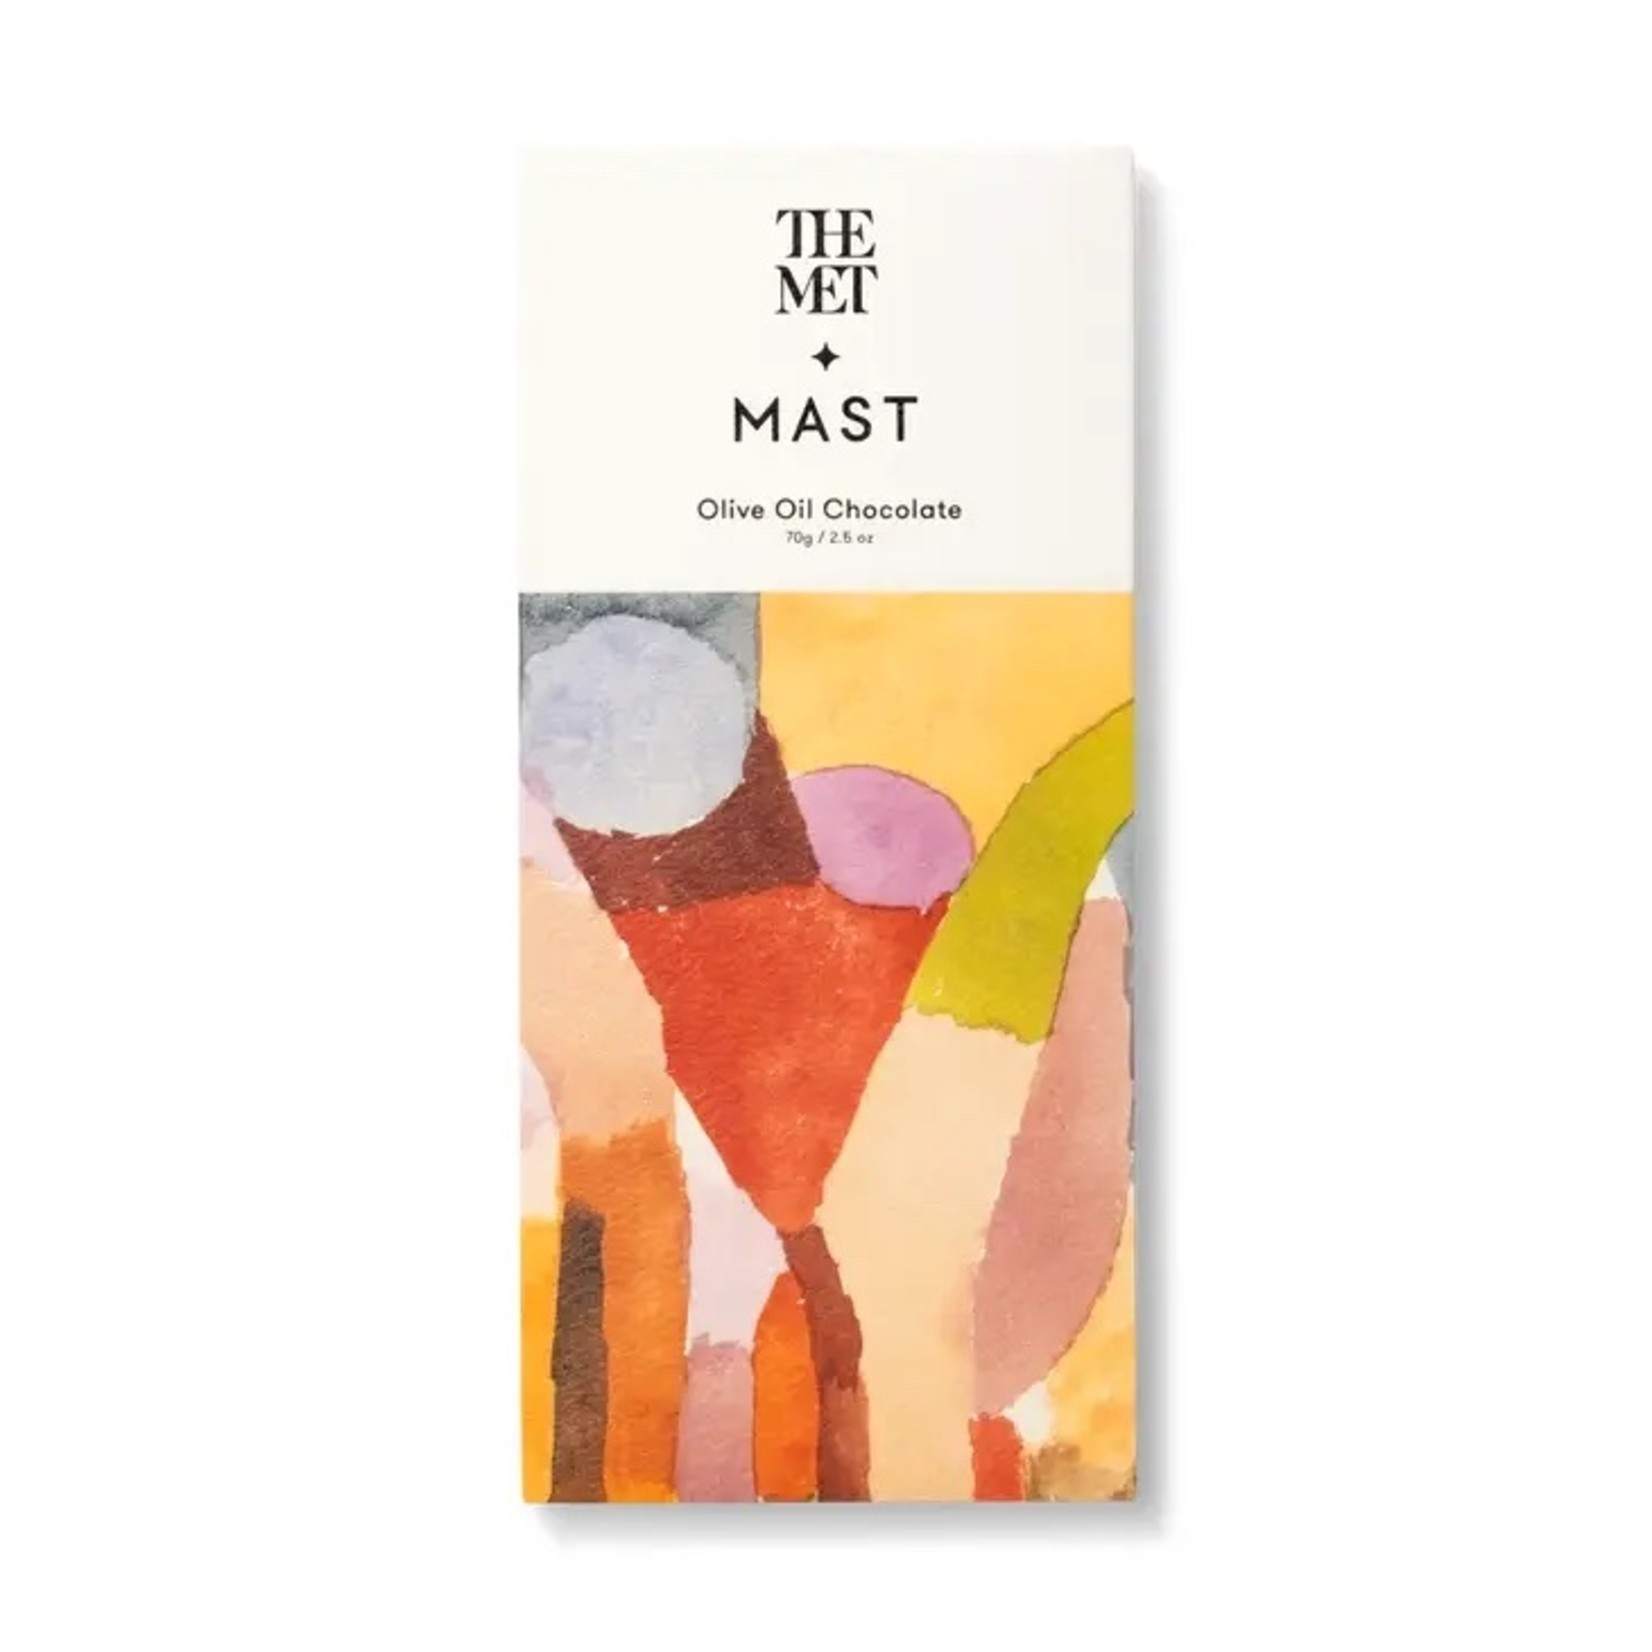 mast The Met: Olive Oil Chocolate